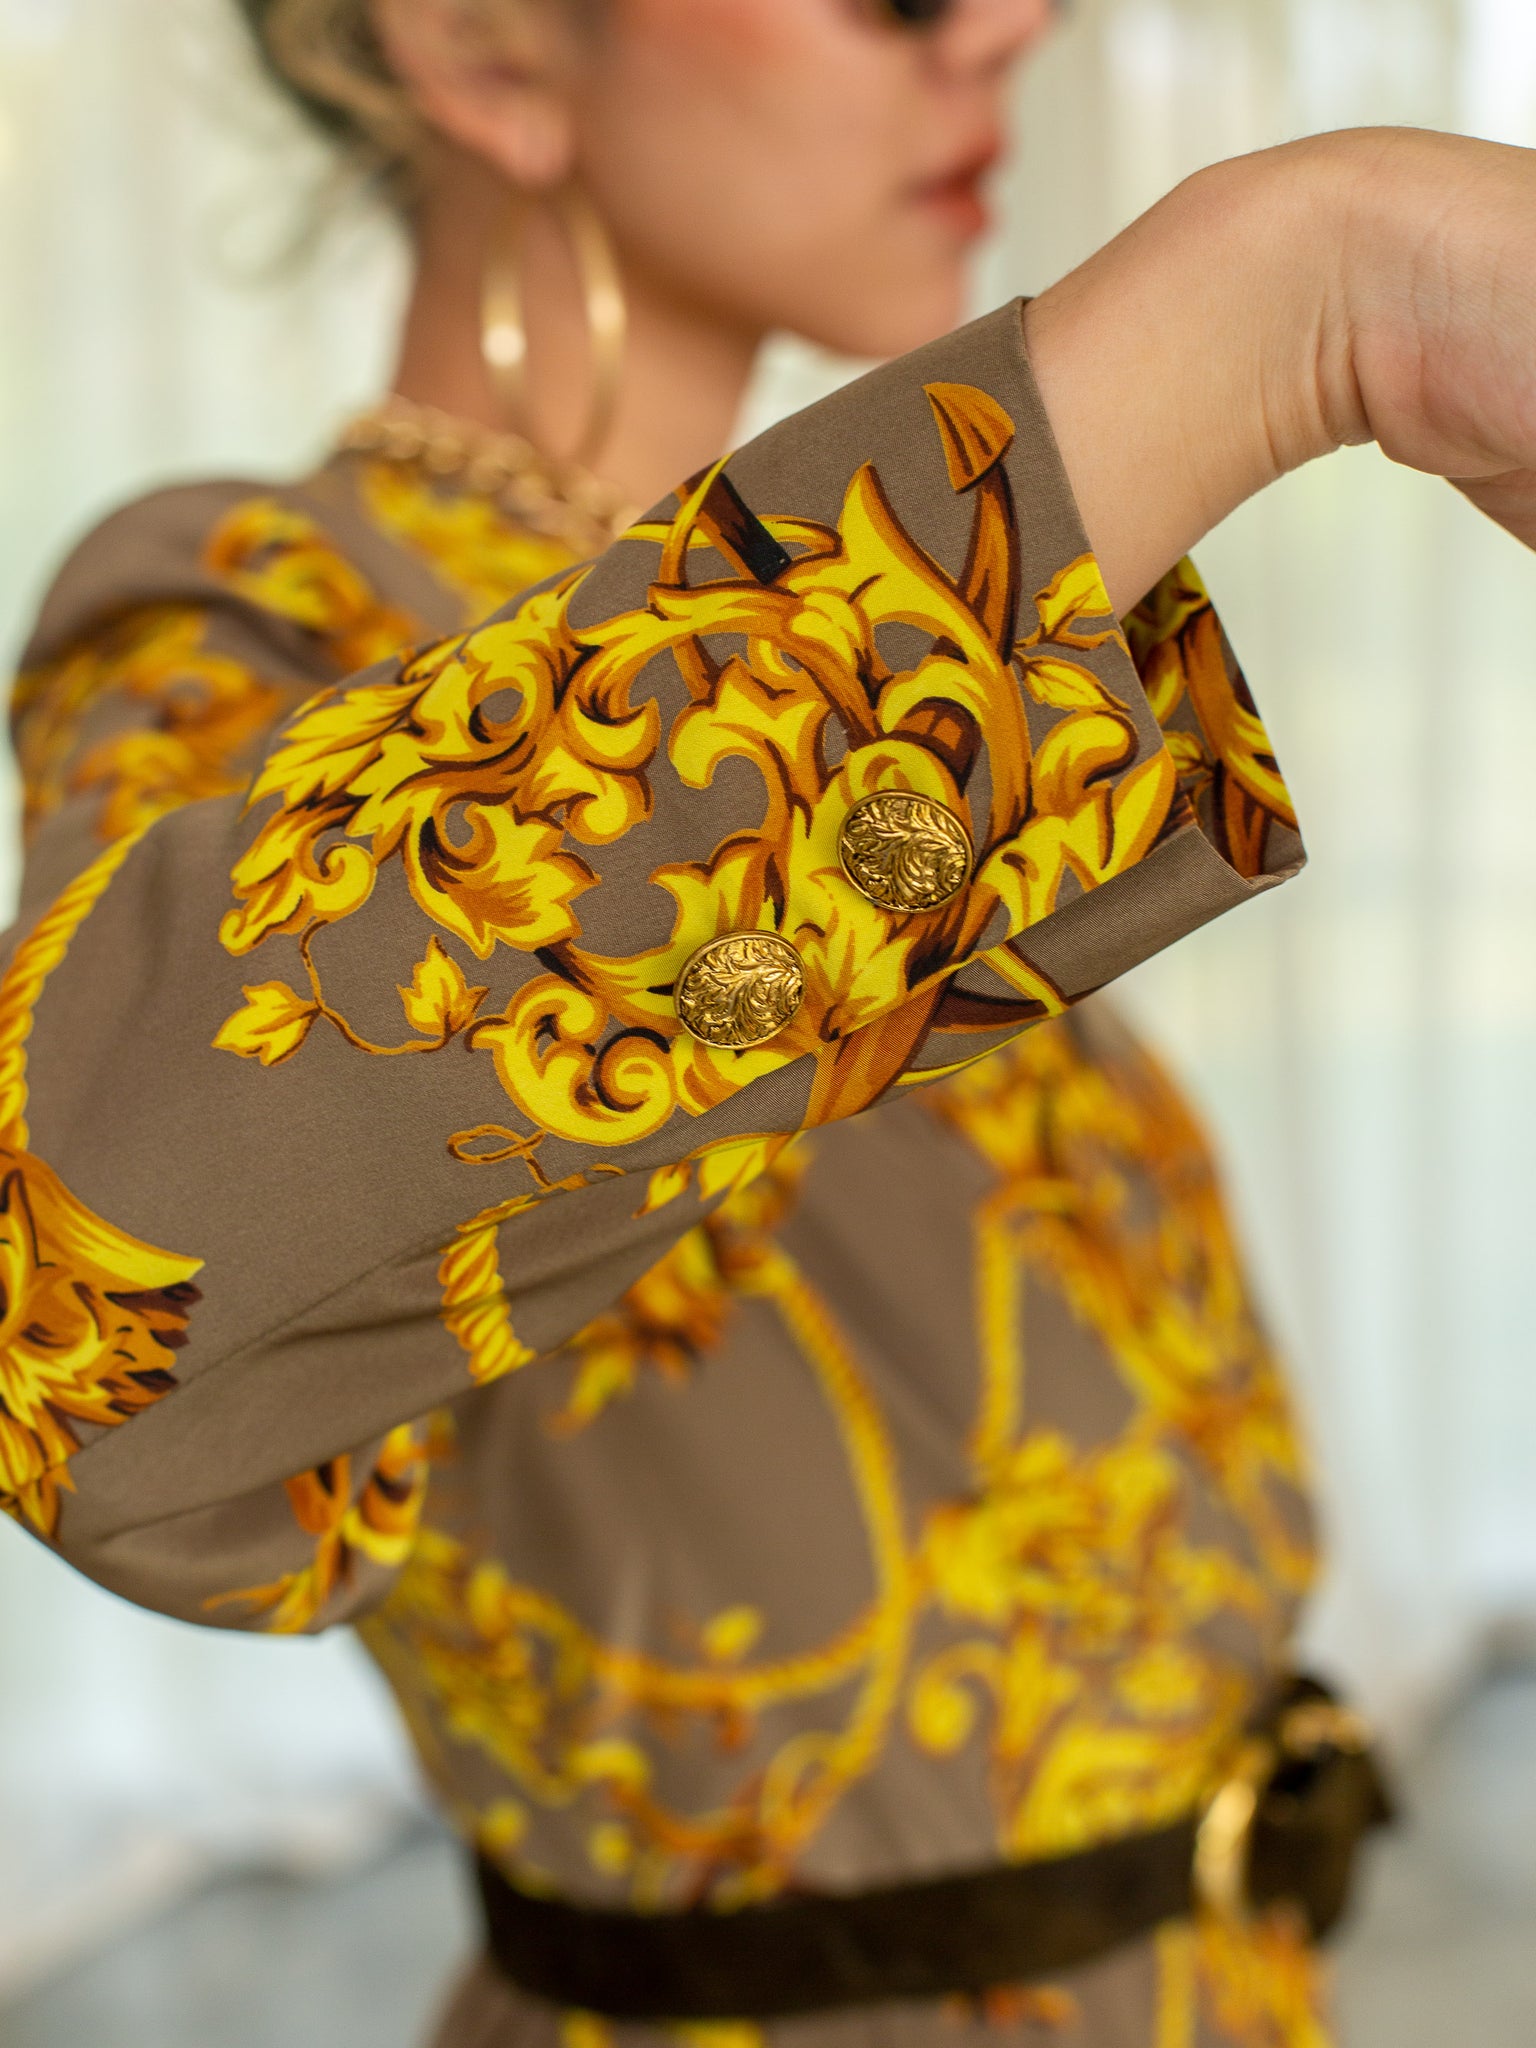 Vintage 80s Gold Baroque print Wrap skirt Japanese Chiffon vintage dress